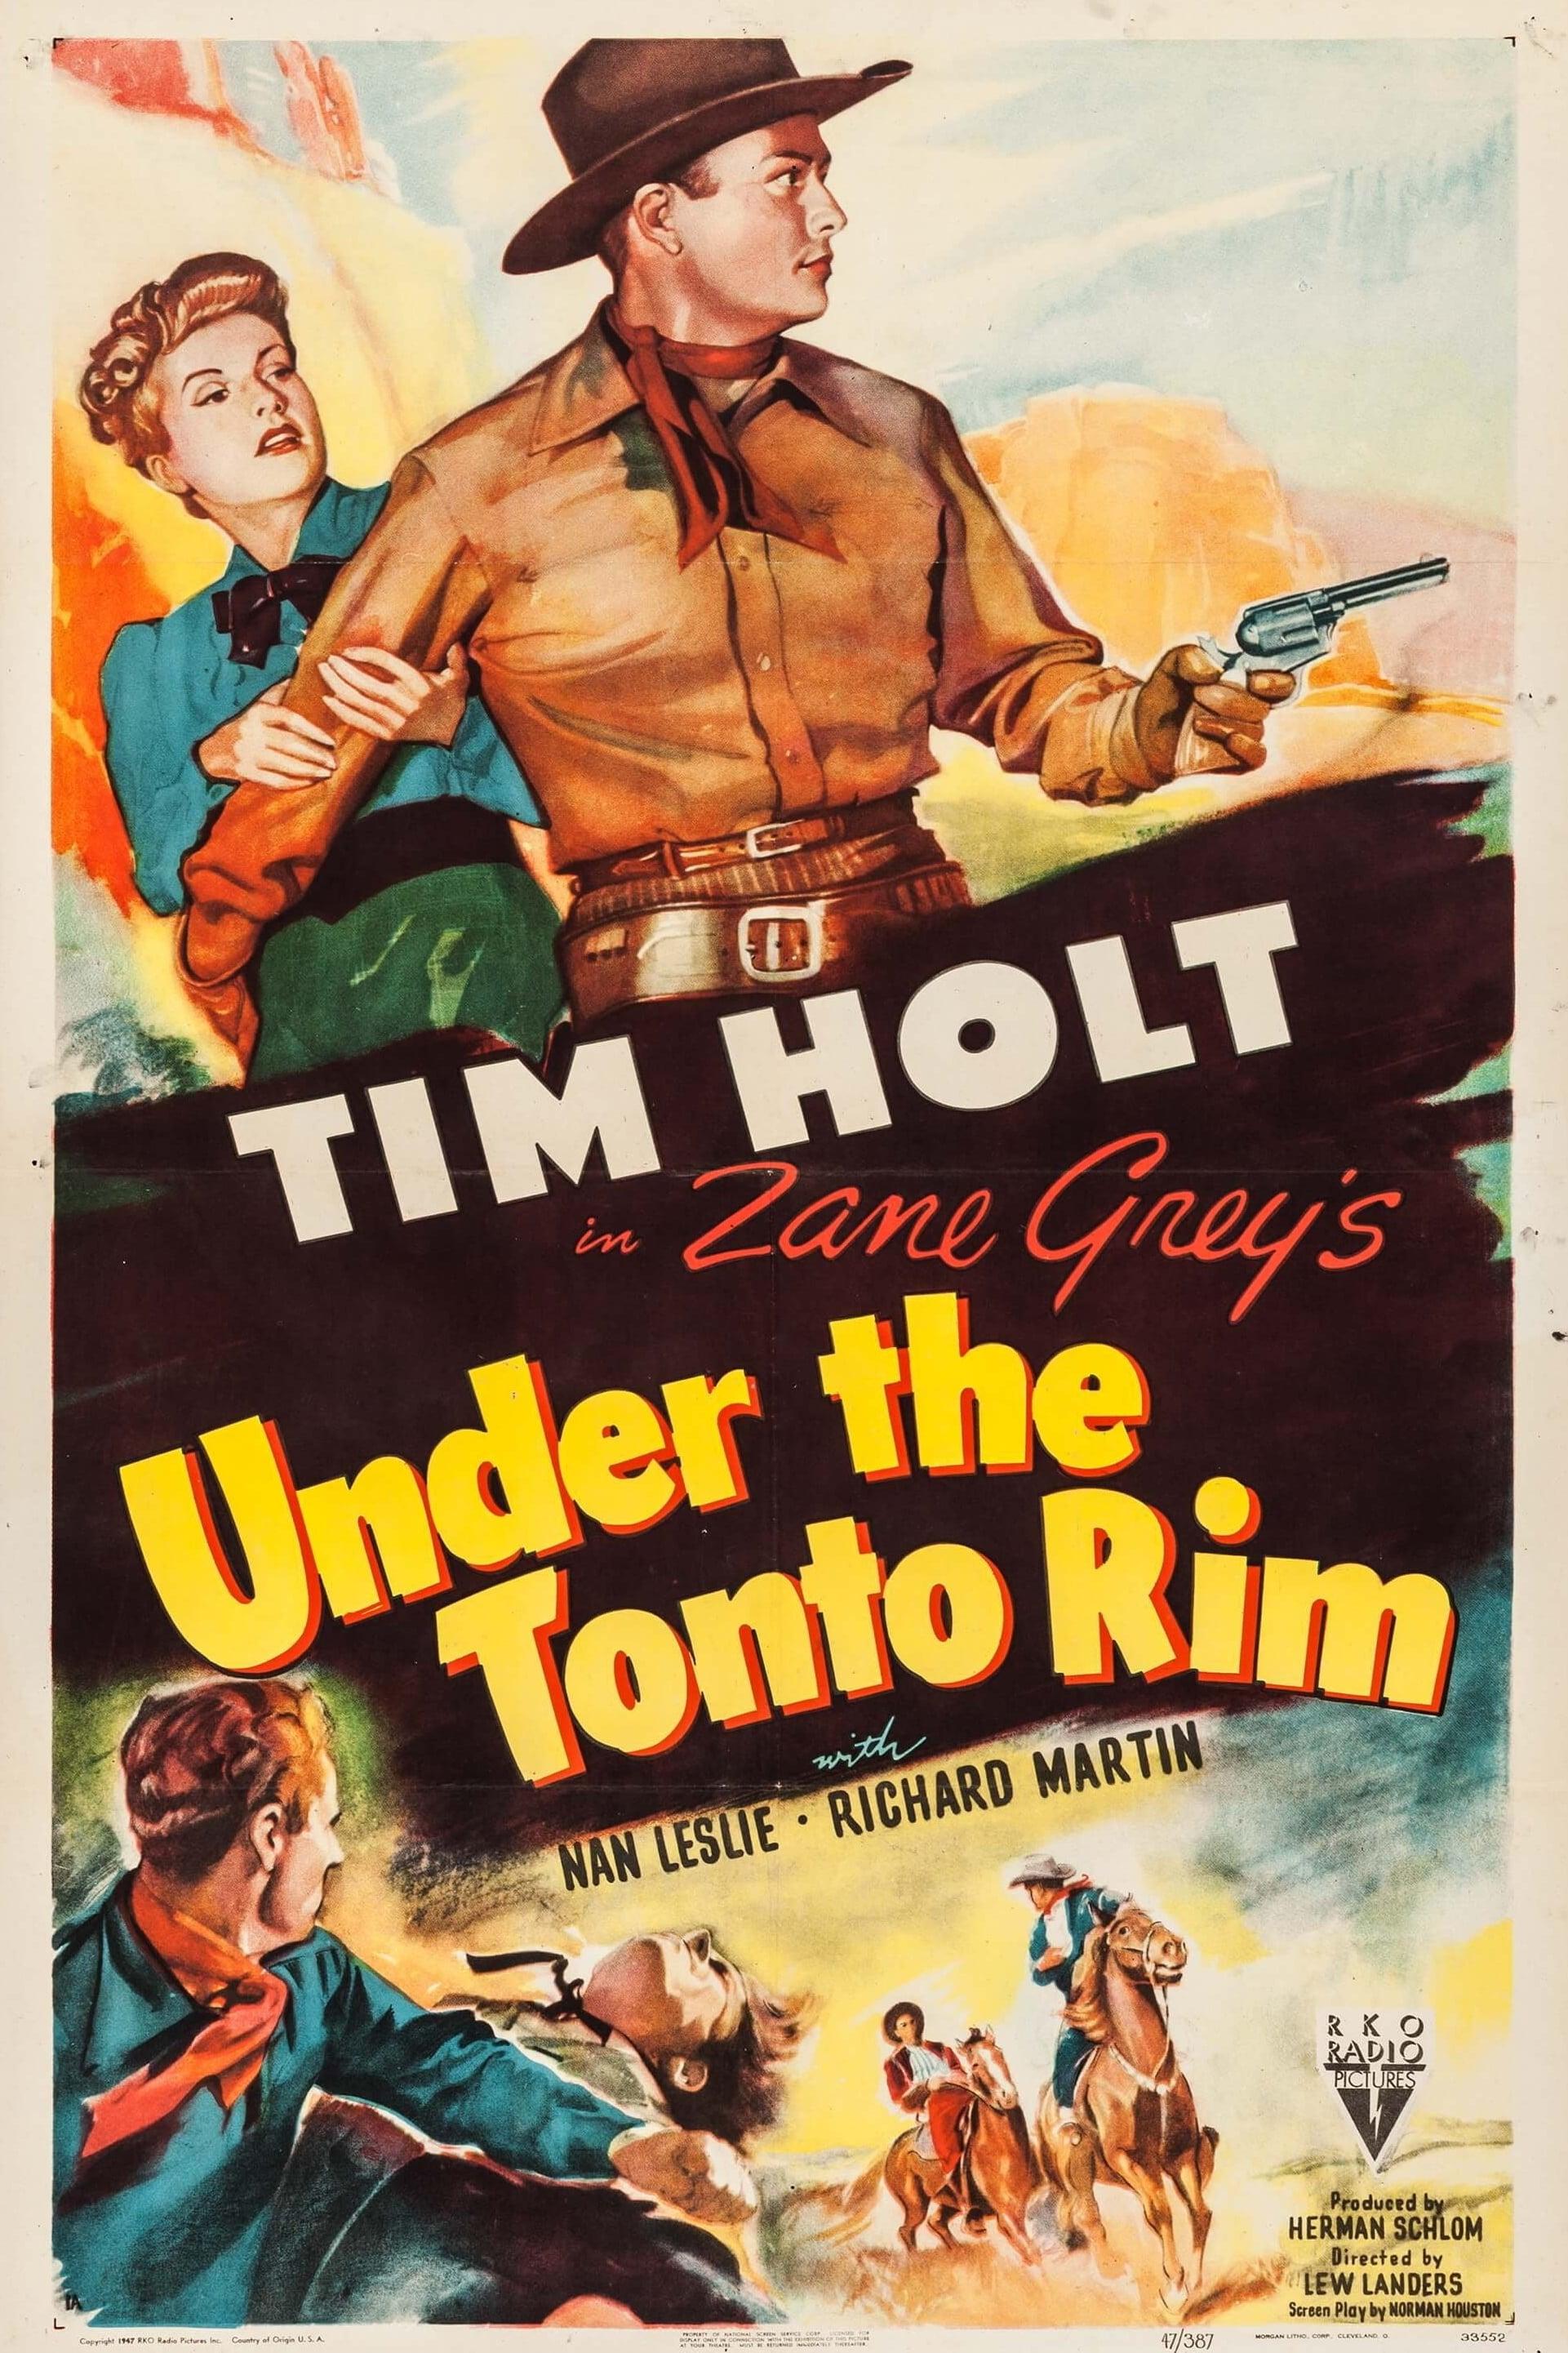 Under the Tonto Rim poster